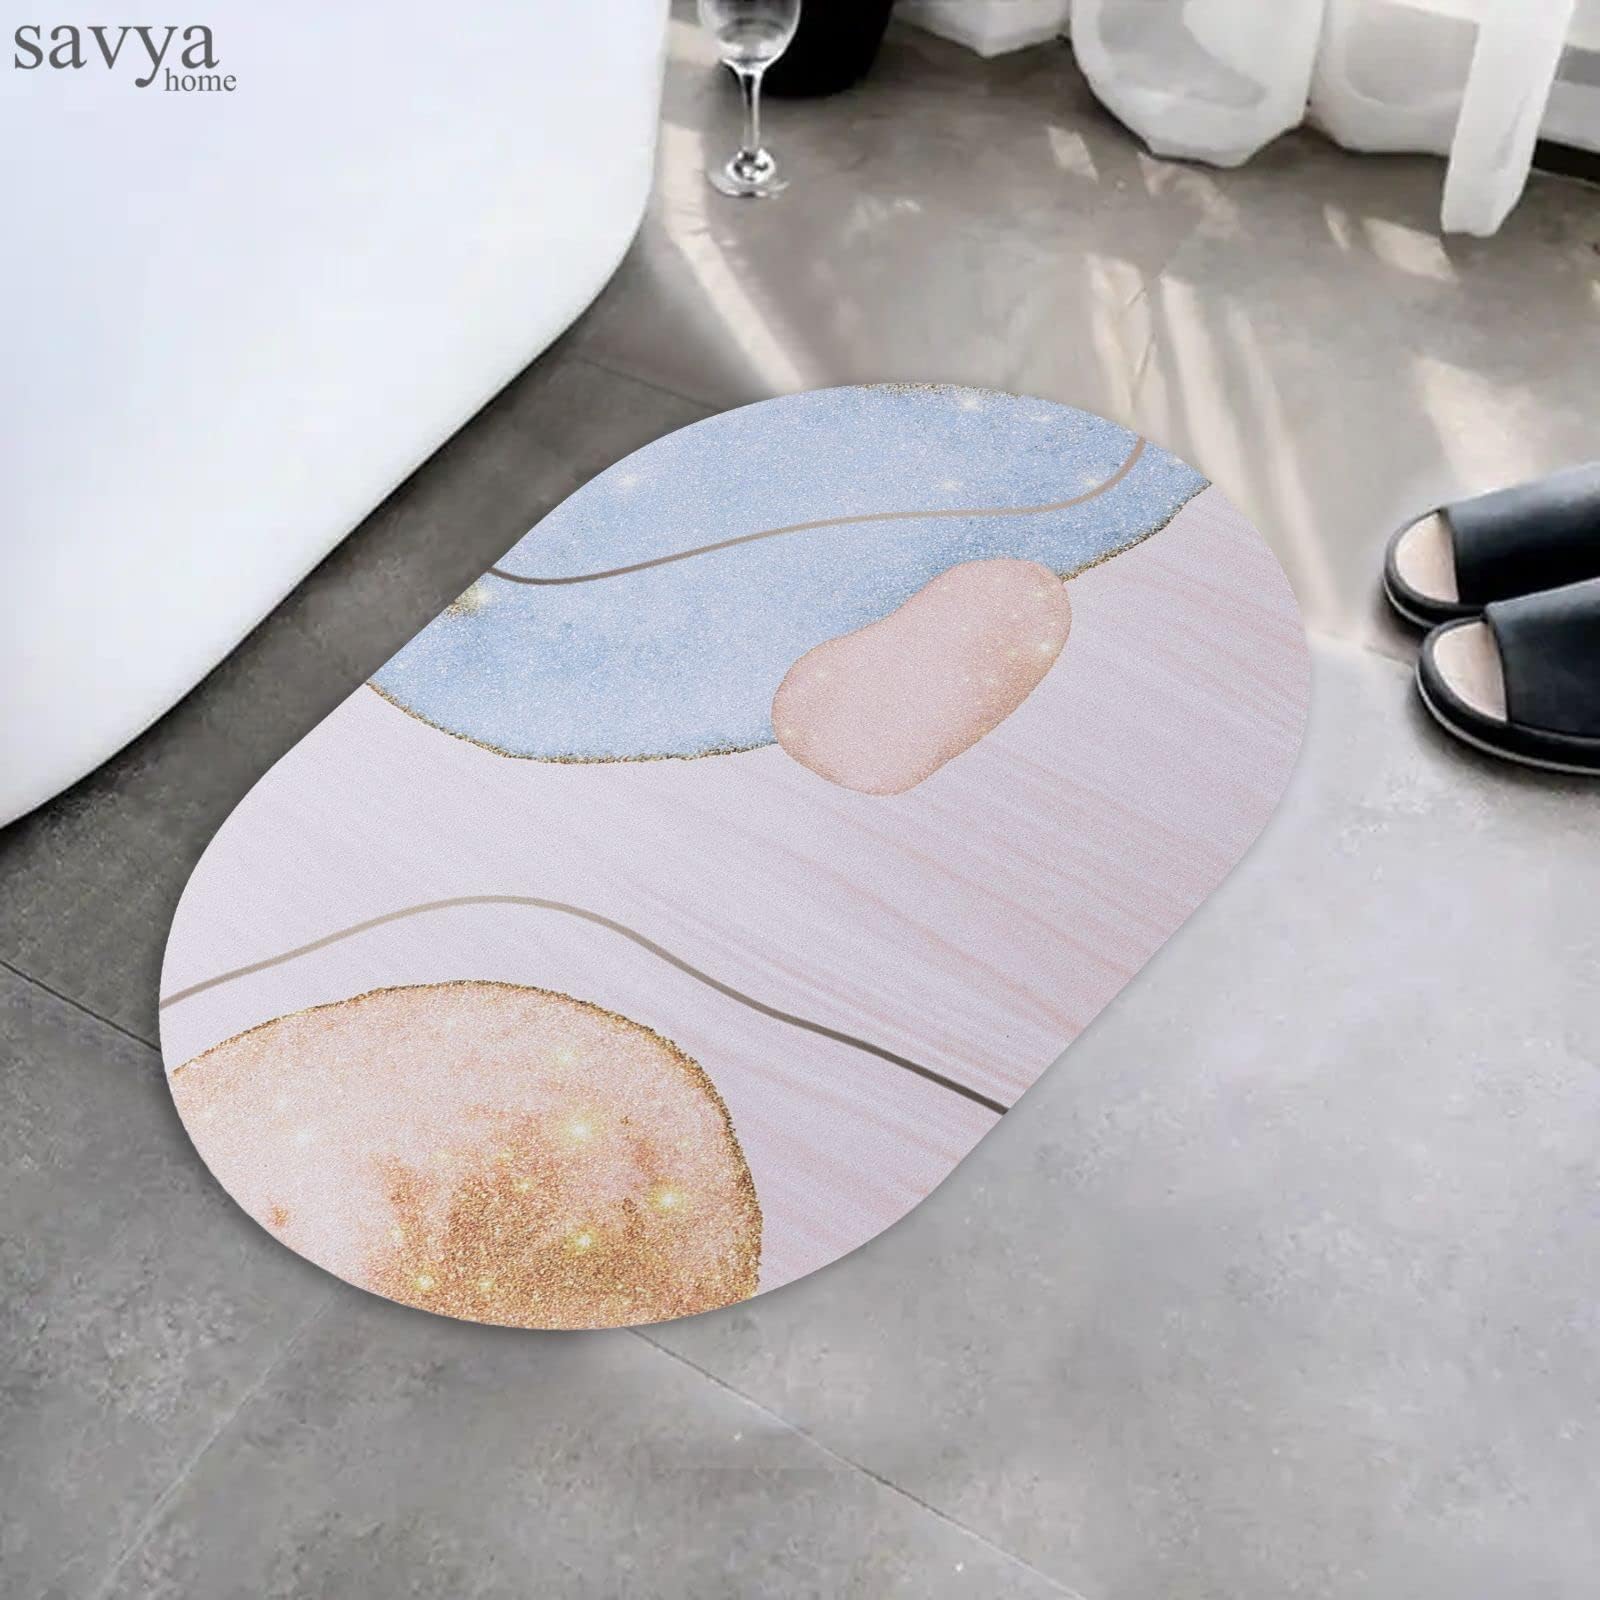 SAVYA HOME Pack of 2 Polypropylene Bathroom Mats|60 x 40cm|Anti-Skid Mat for Living Room, Kitchen, Shower, Bathtub |Multipurpose Mat(Ivory)